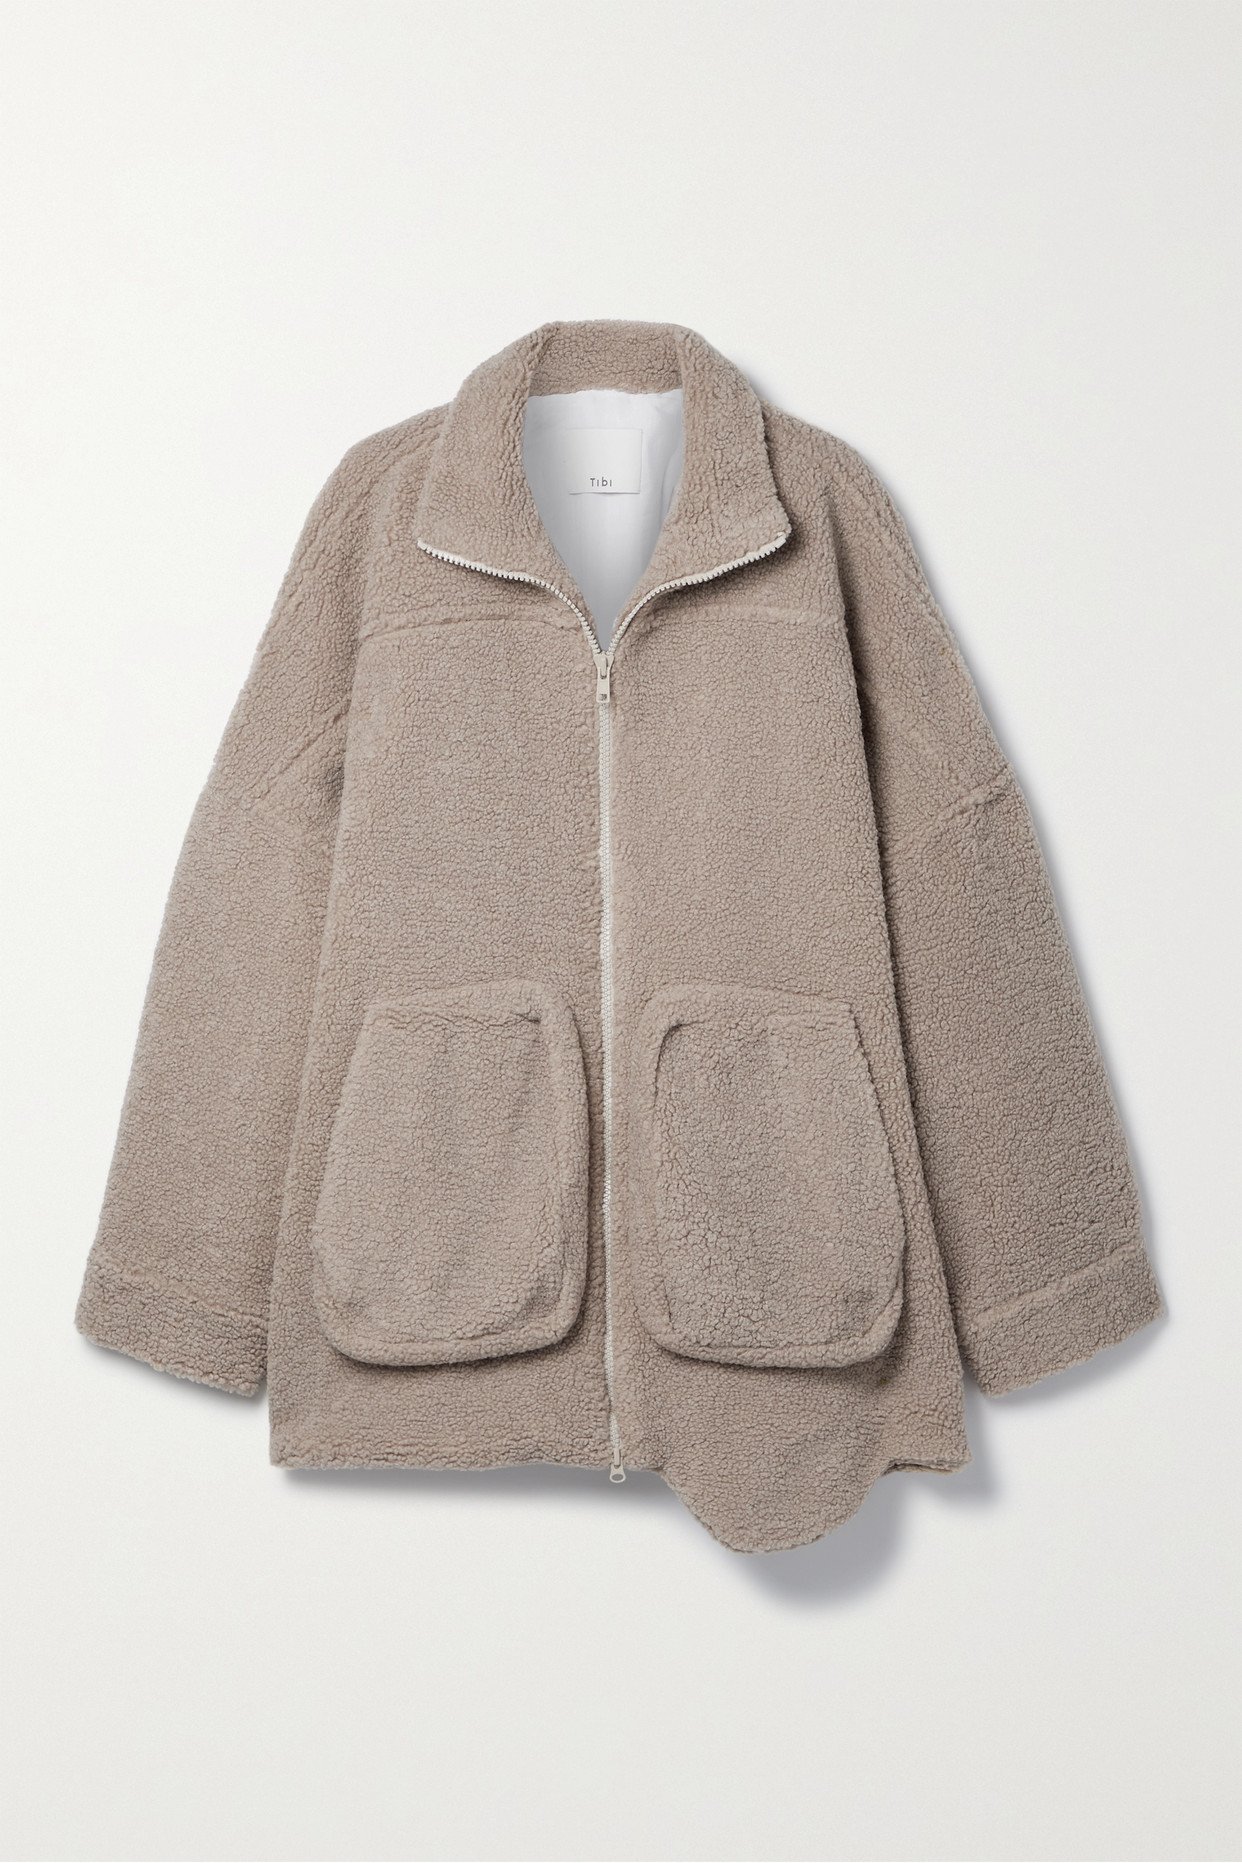 Cozy Fleece Jacket by Tibi for $120